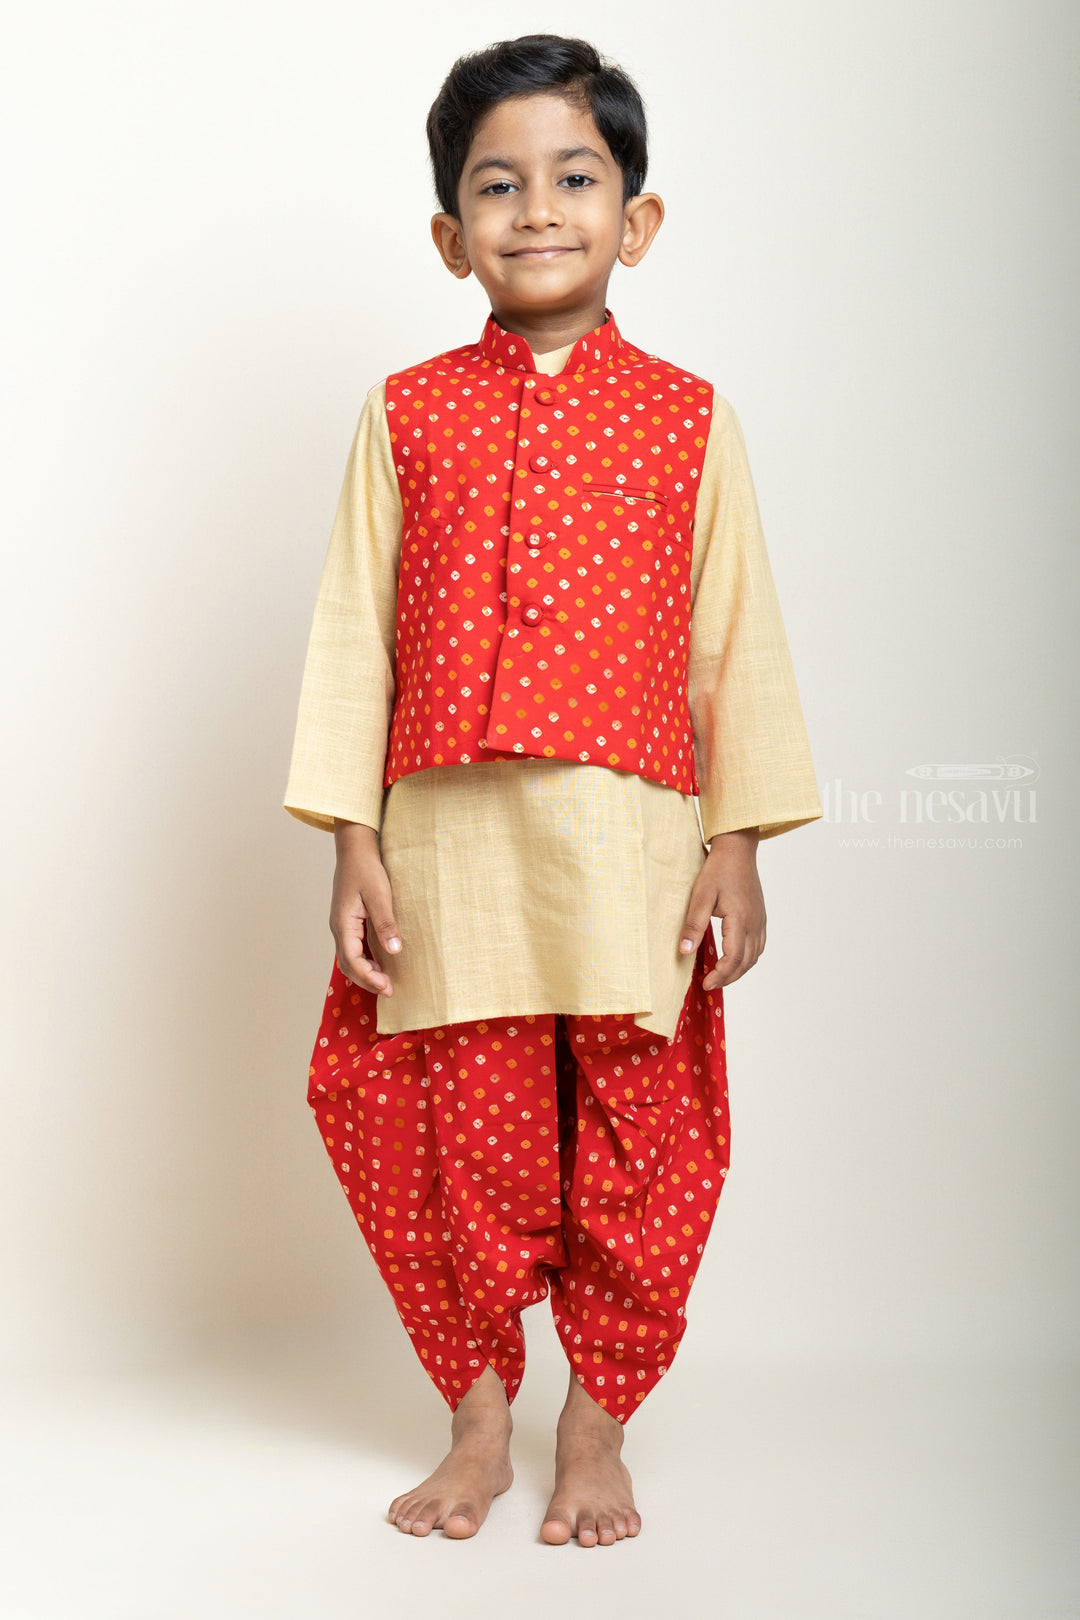 The Nesavu Boys Dothi Set Pleasing Sandal Cotton Kurta With Bandhani Printed Jacket And Dhoti For Boys Nesavu 16 (1Y) / Red / Cotton BES277 Ethnic Wear Kurta And Dhoti For Boys| Best Designs| The Nesavu